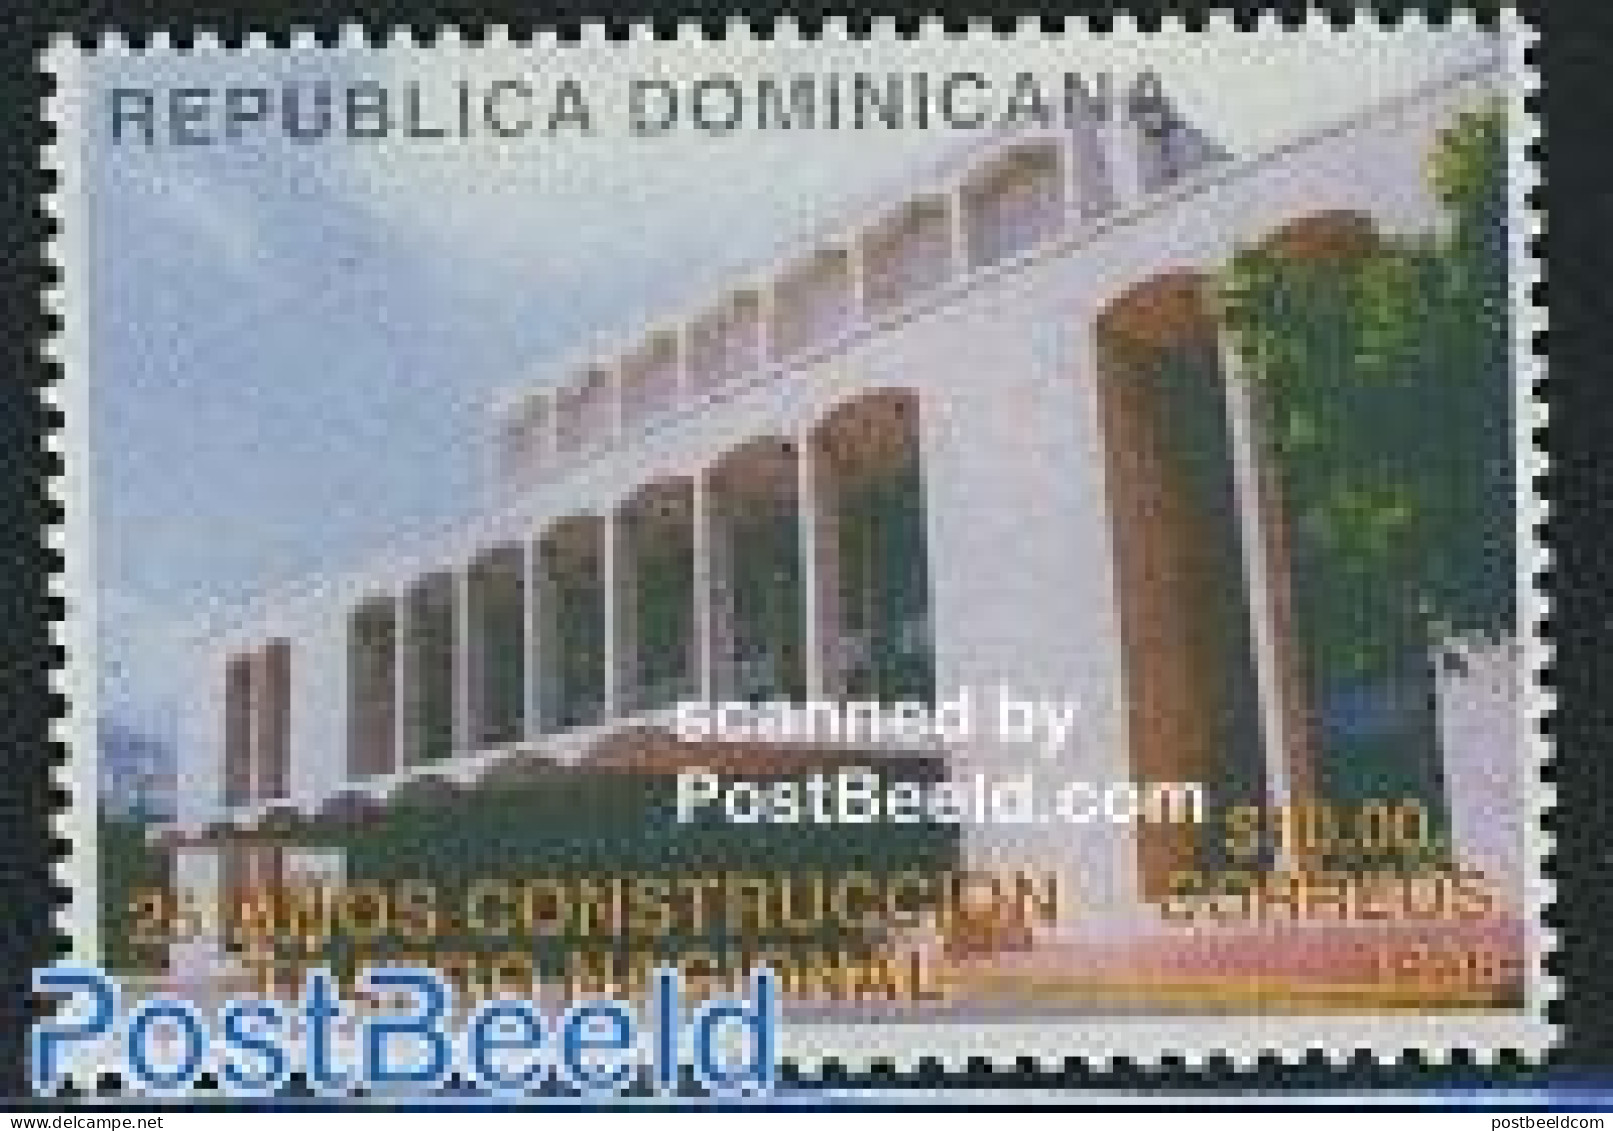 Dominican Republic 1998 National Theatre 1v, Mint NH, Performance Art - Theatre - Theatre